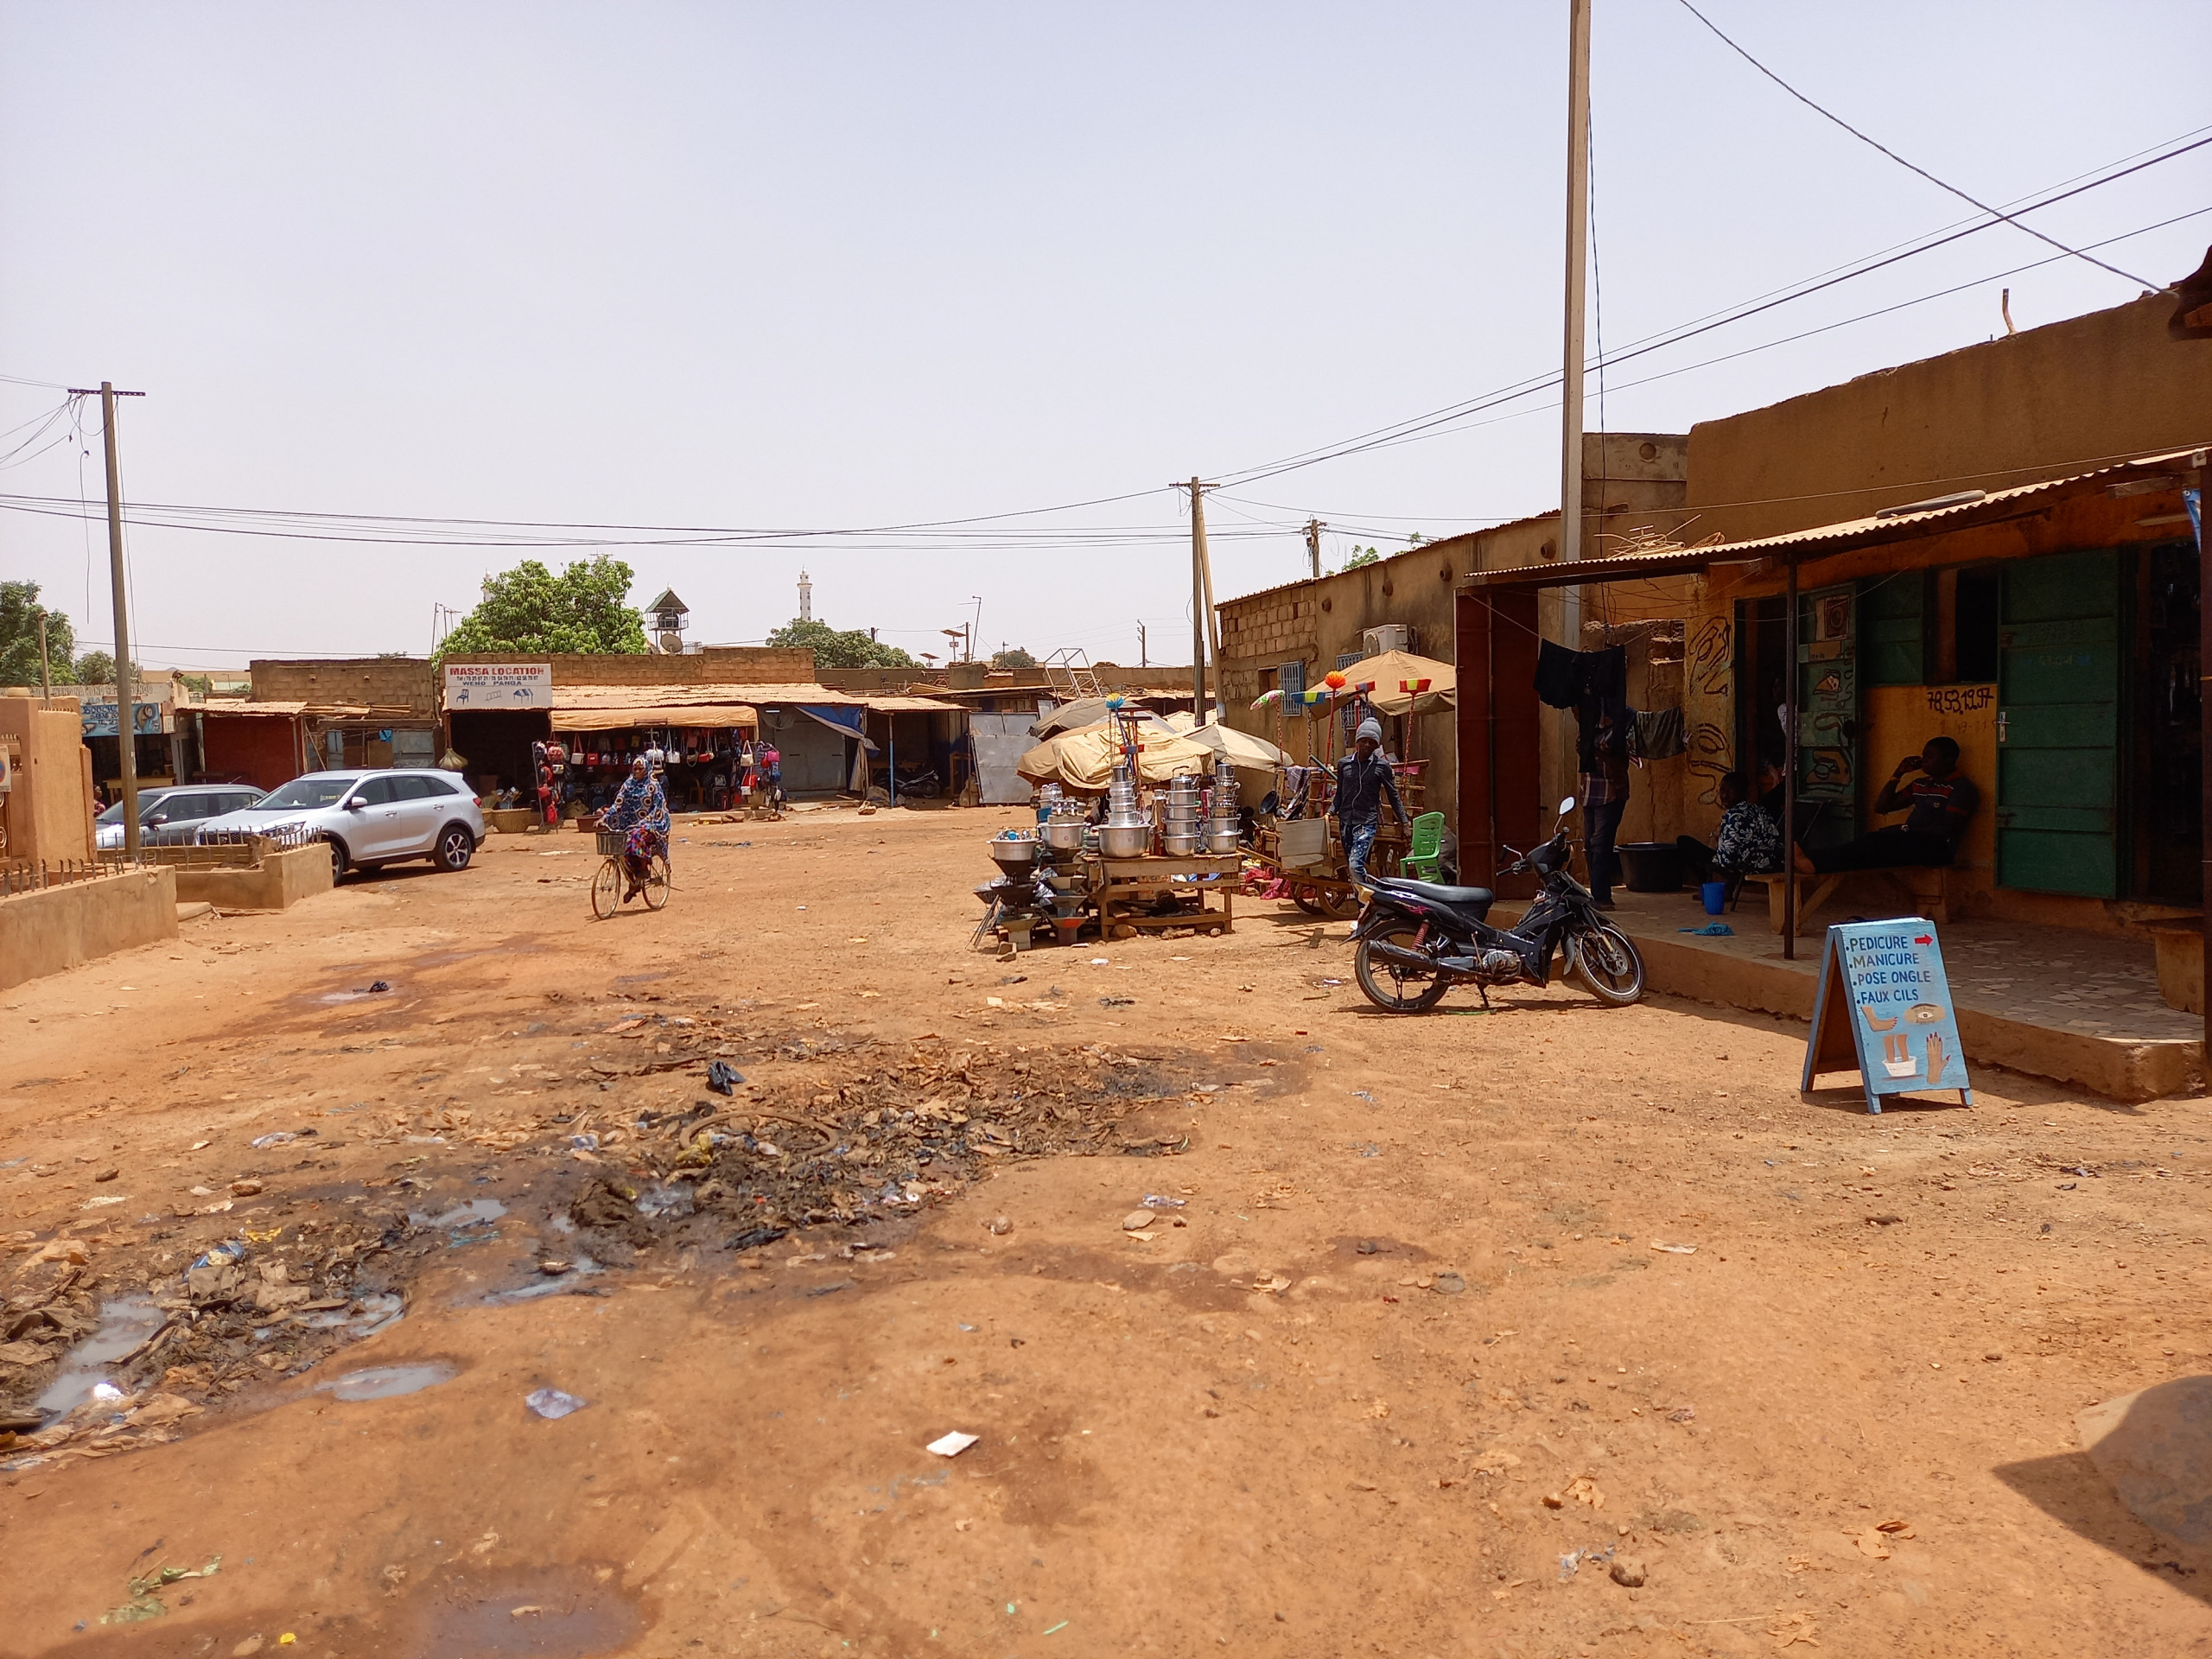 Straßenszene in Ouagadougou, der Hauptstadt Burkina Fasos.